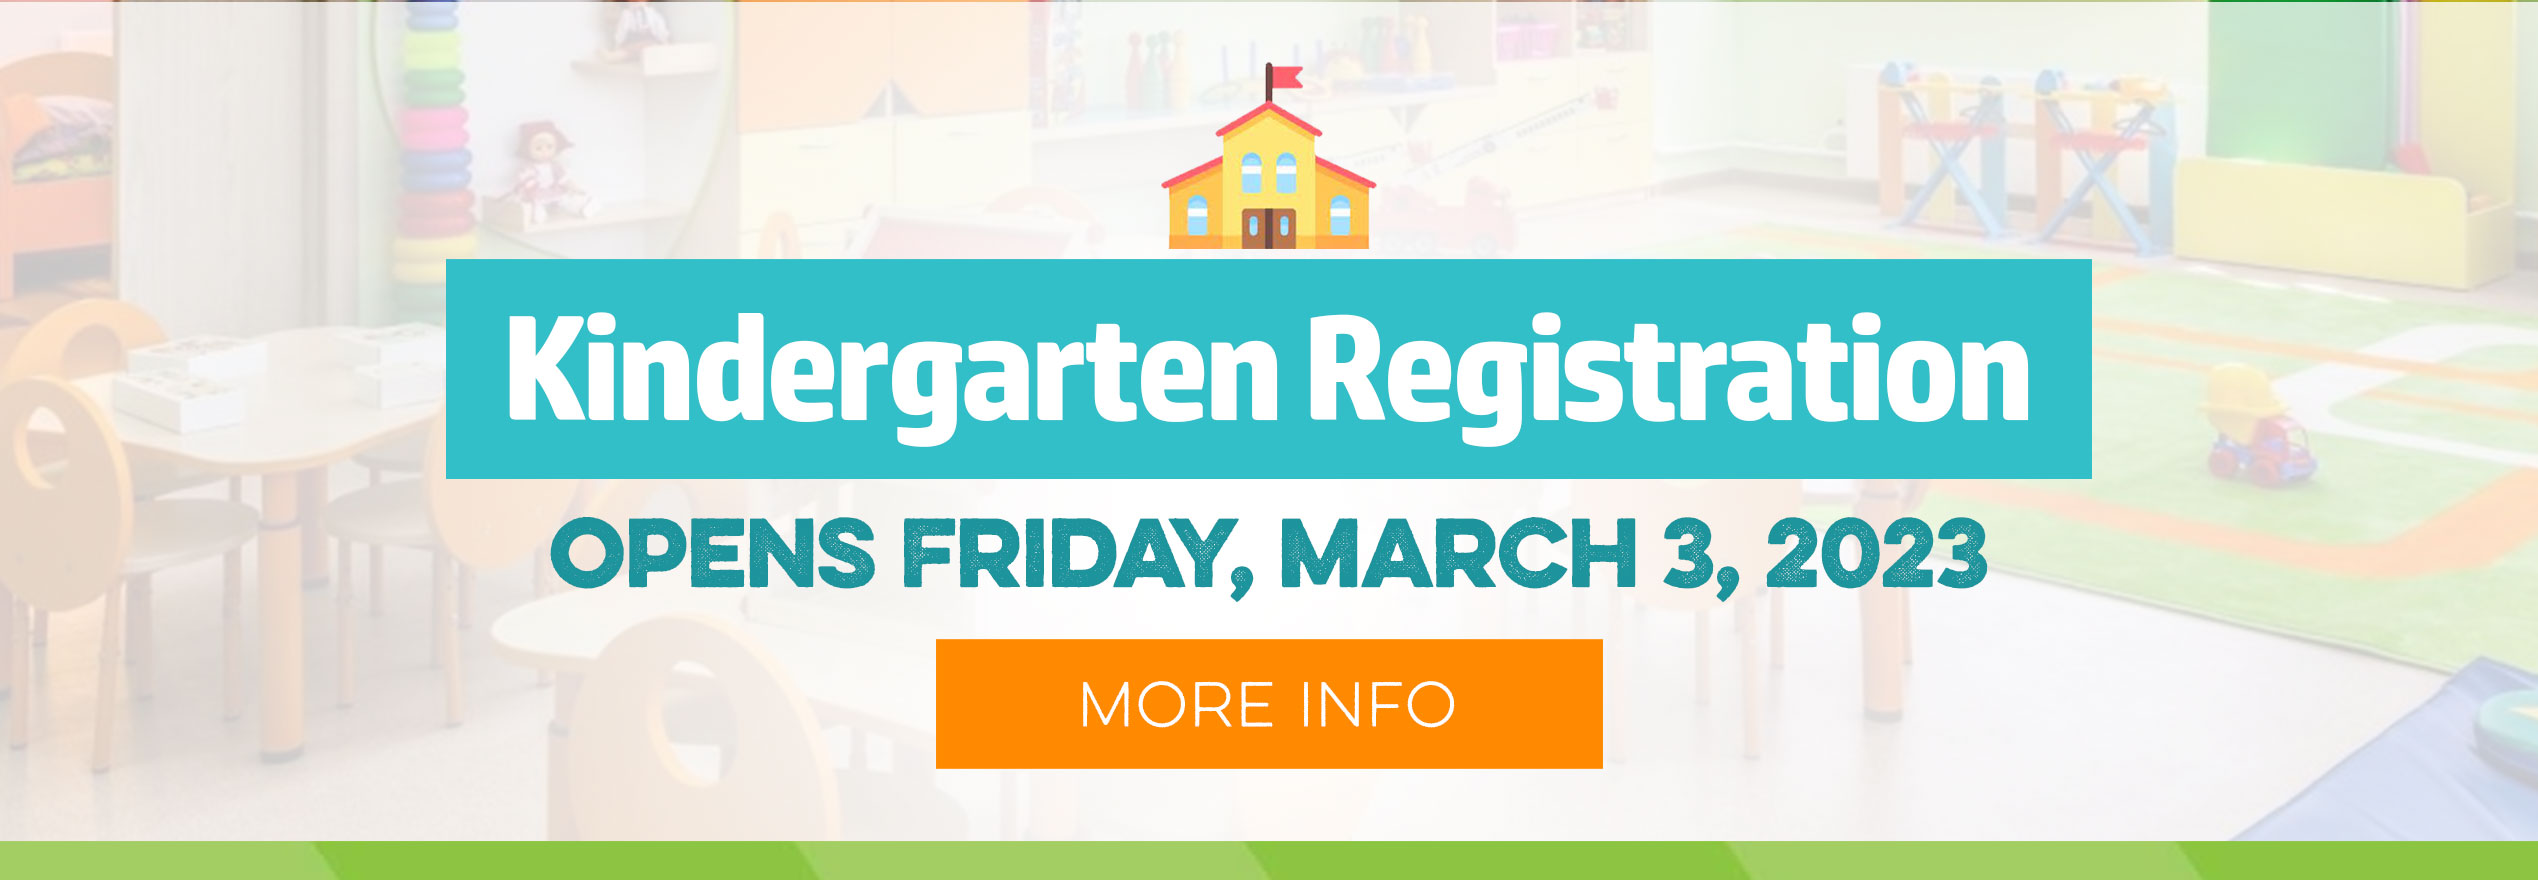 Kindergarten Registration Opens March 03, 2023